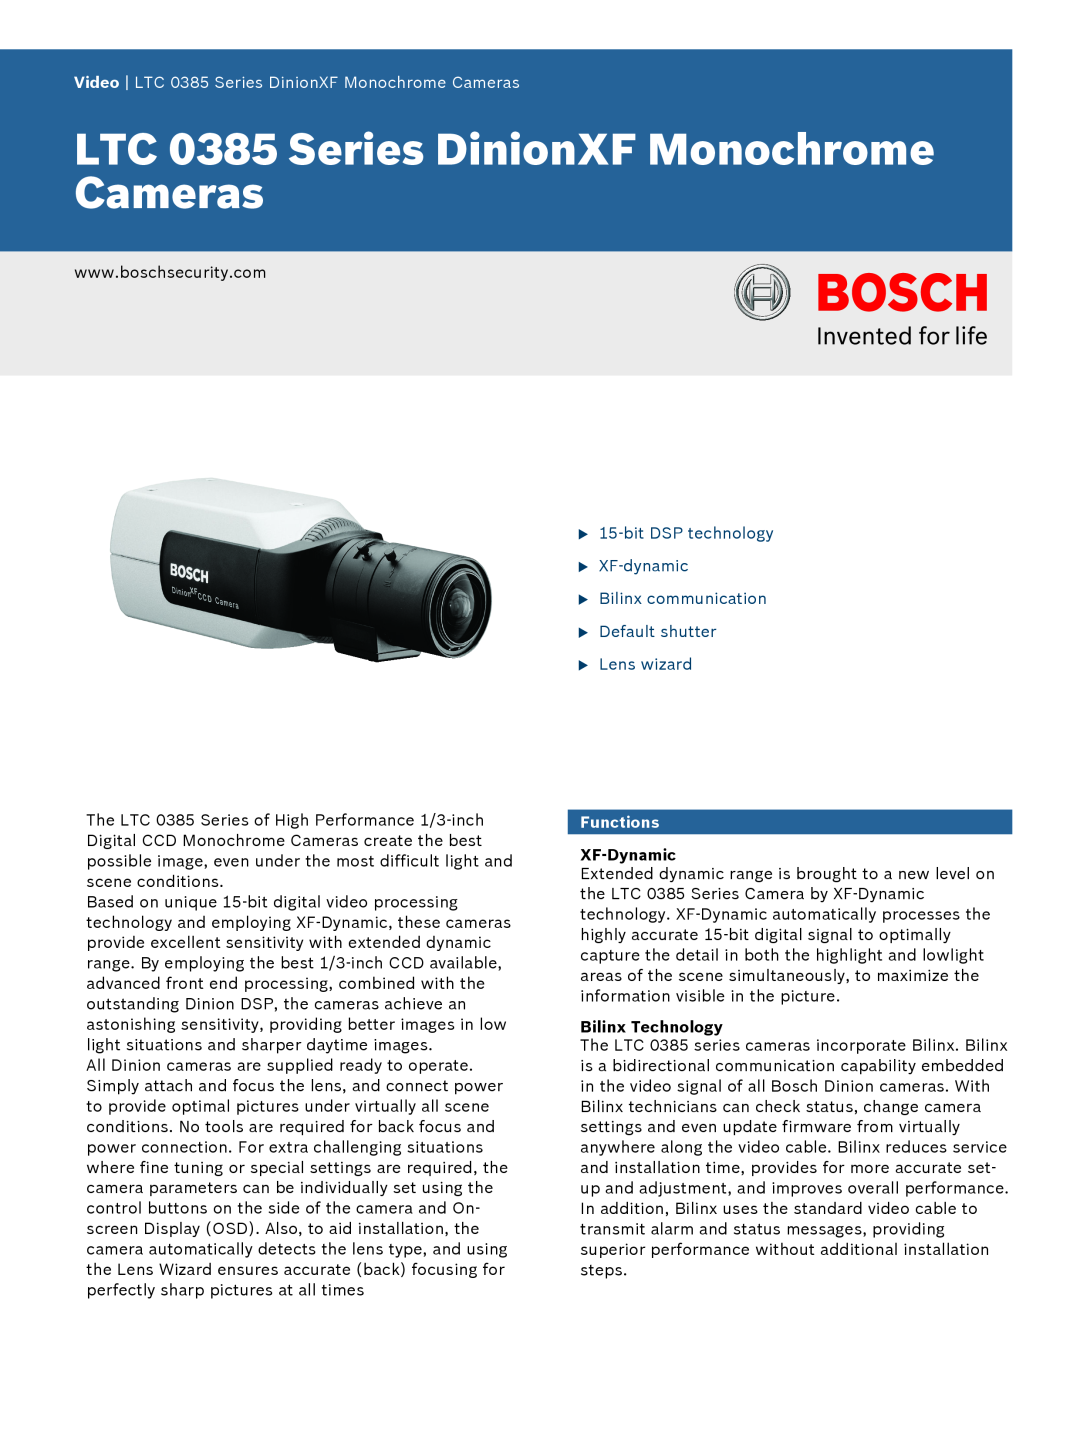 Bosch Appliances LTC385 manual Functions, XF-Dynamic, Bilinx Technology, LTC 0385 Series DinionXF Monochrome Cameras 